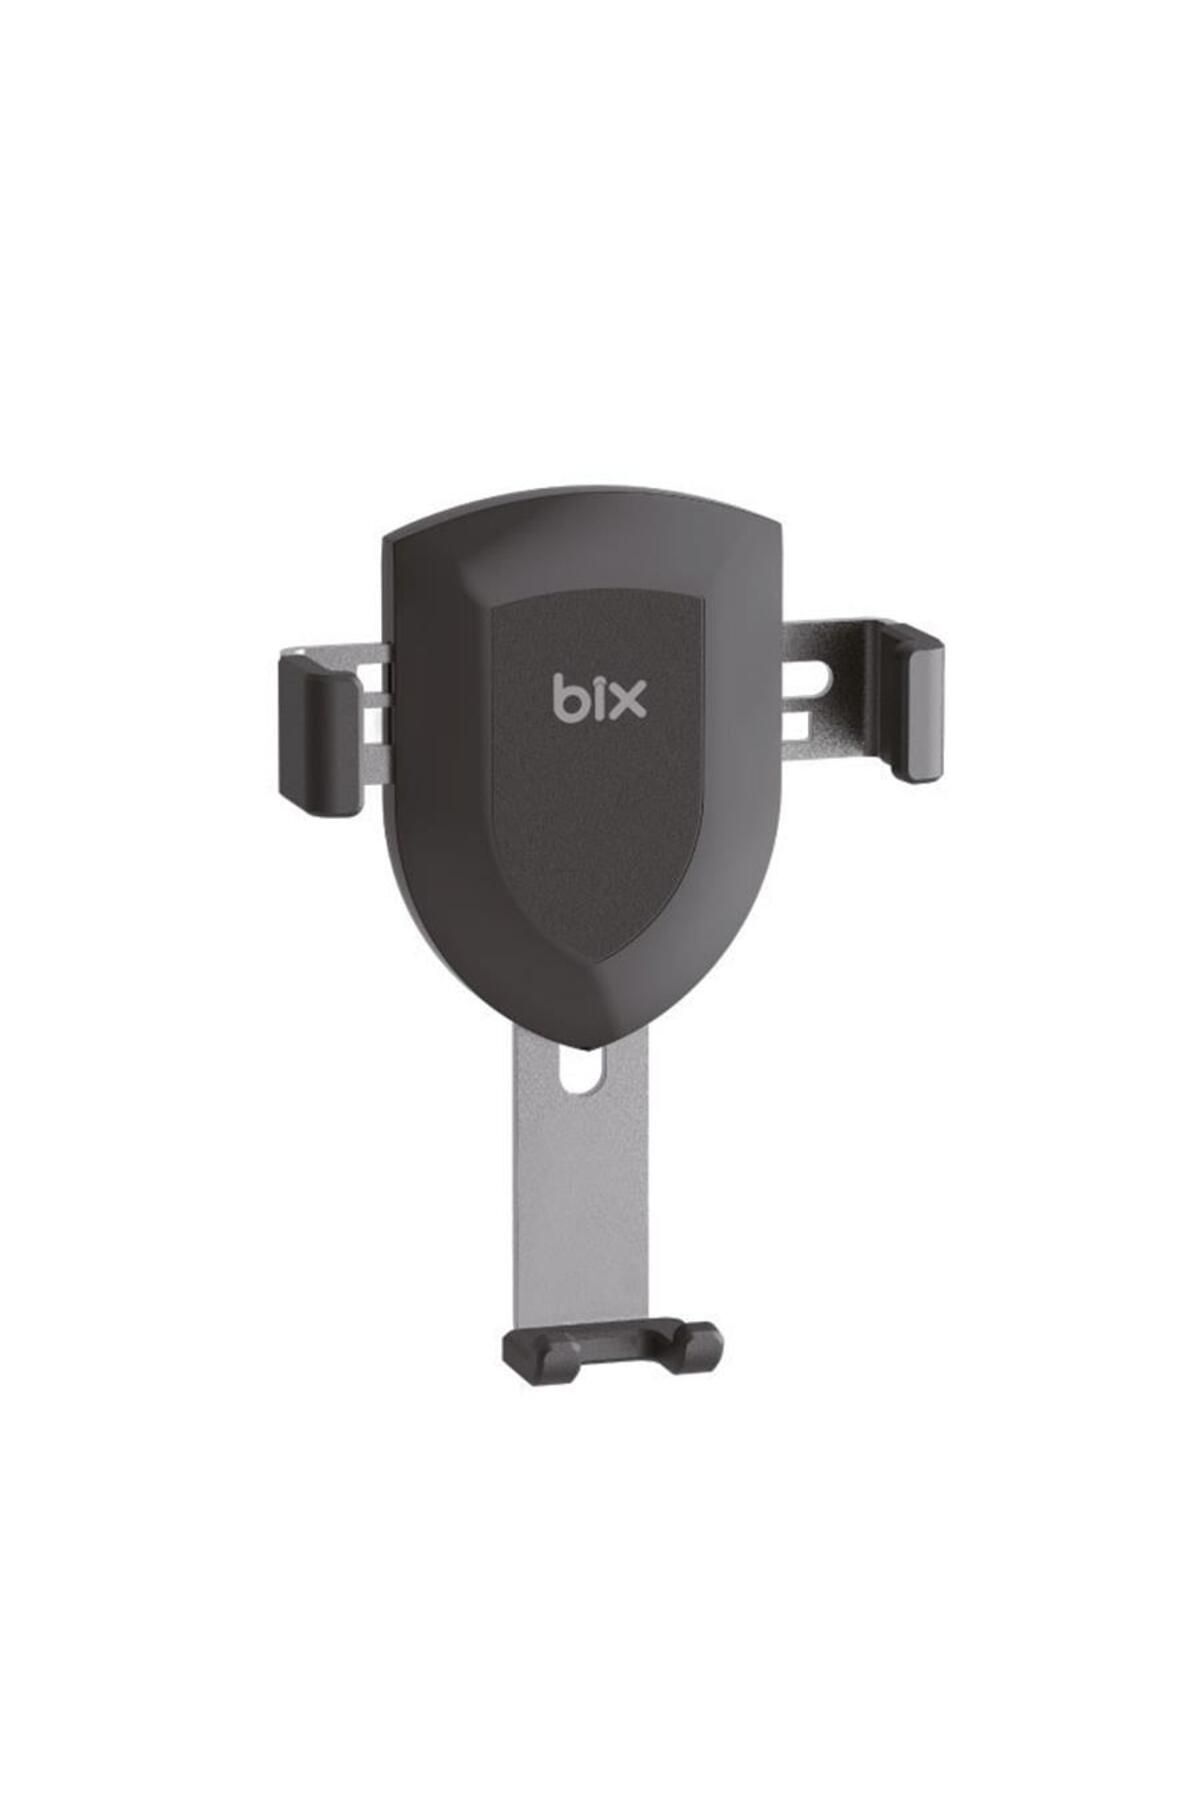 Bix Bx-ch1 Universal Premium Araç Içi Telefon Tutucu